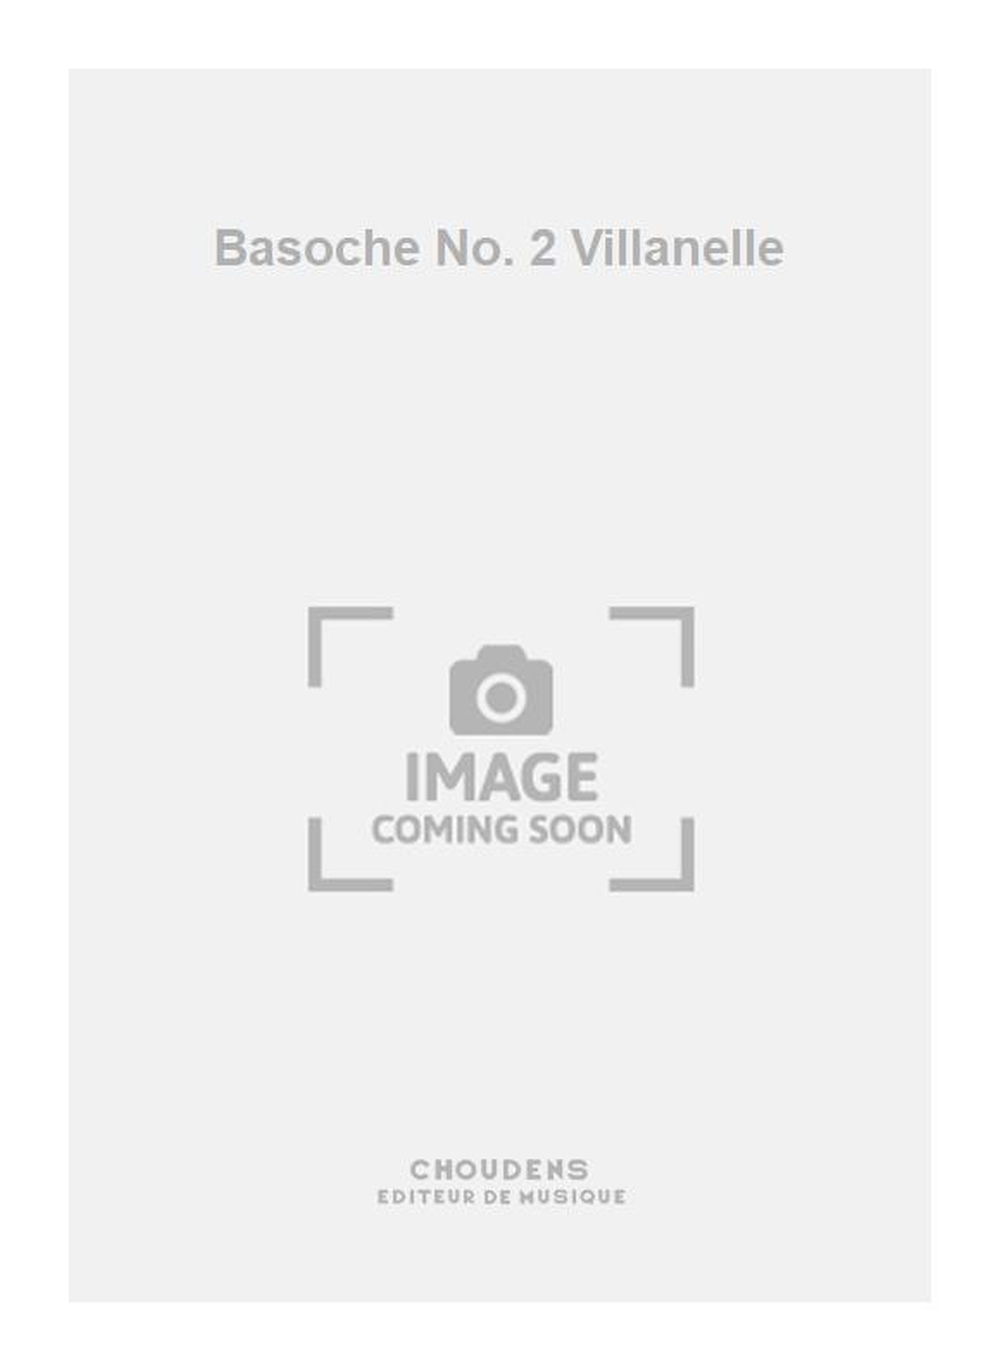 Basoche No. 2 Villanelle